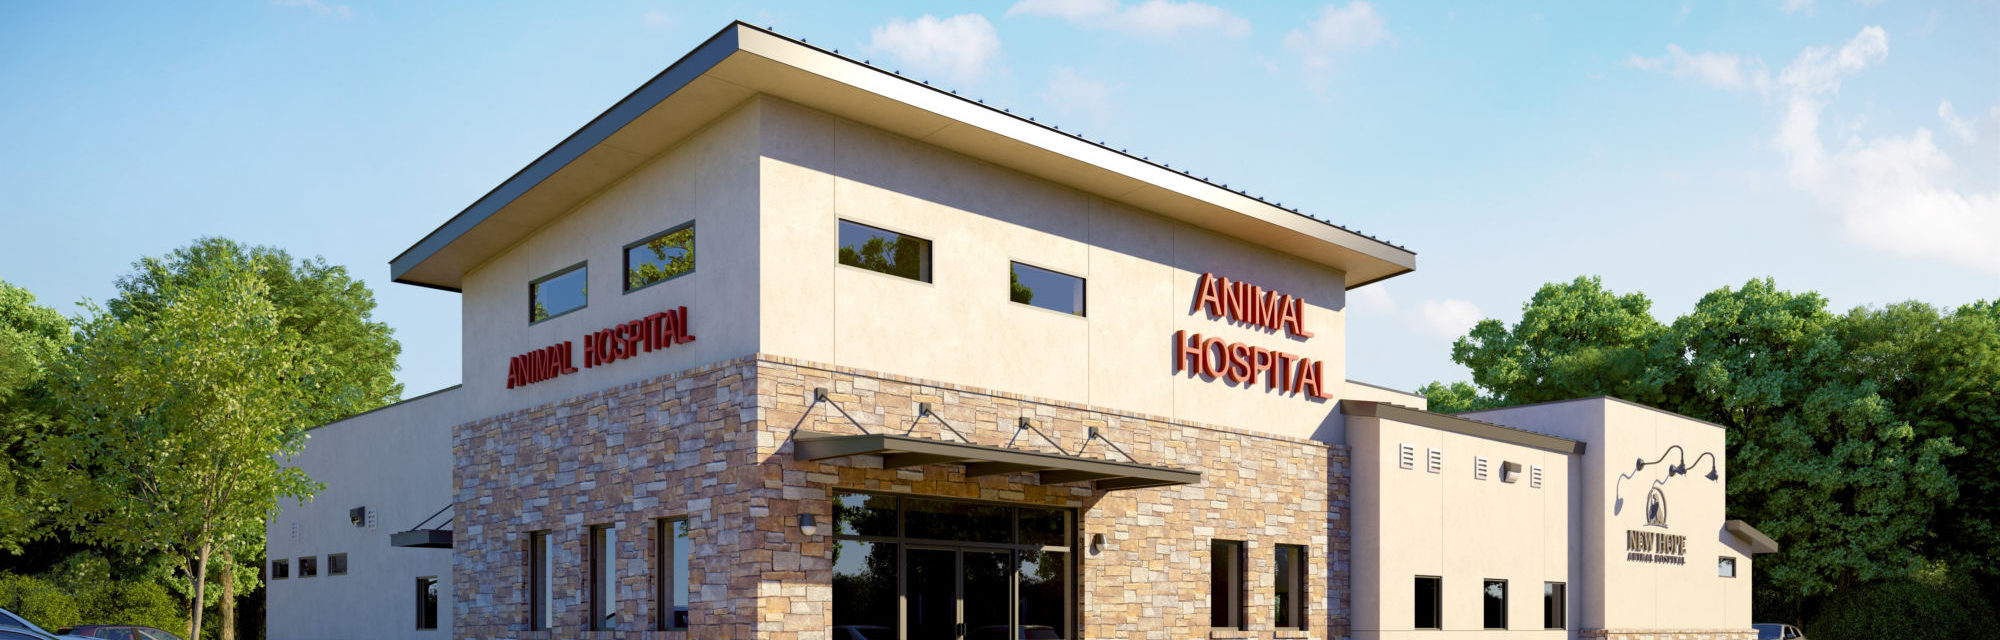 New Hope Animal Hospital | Huffman Builders